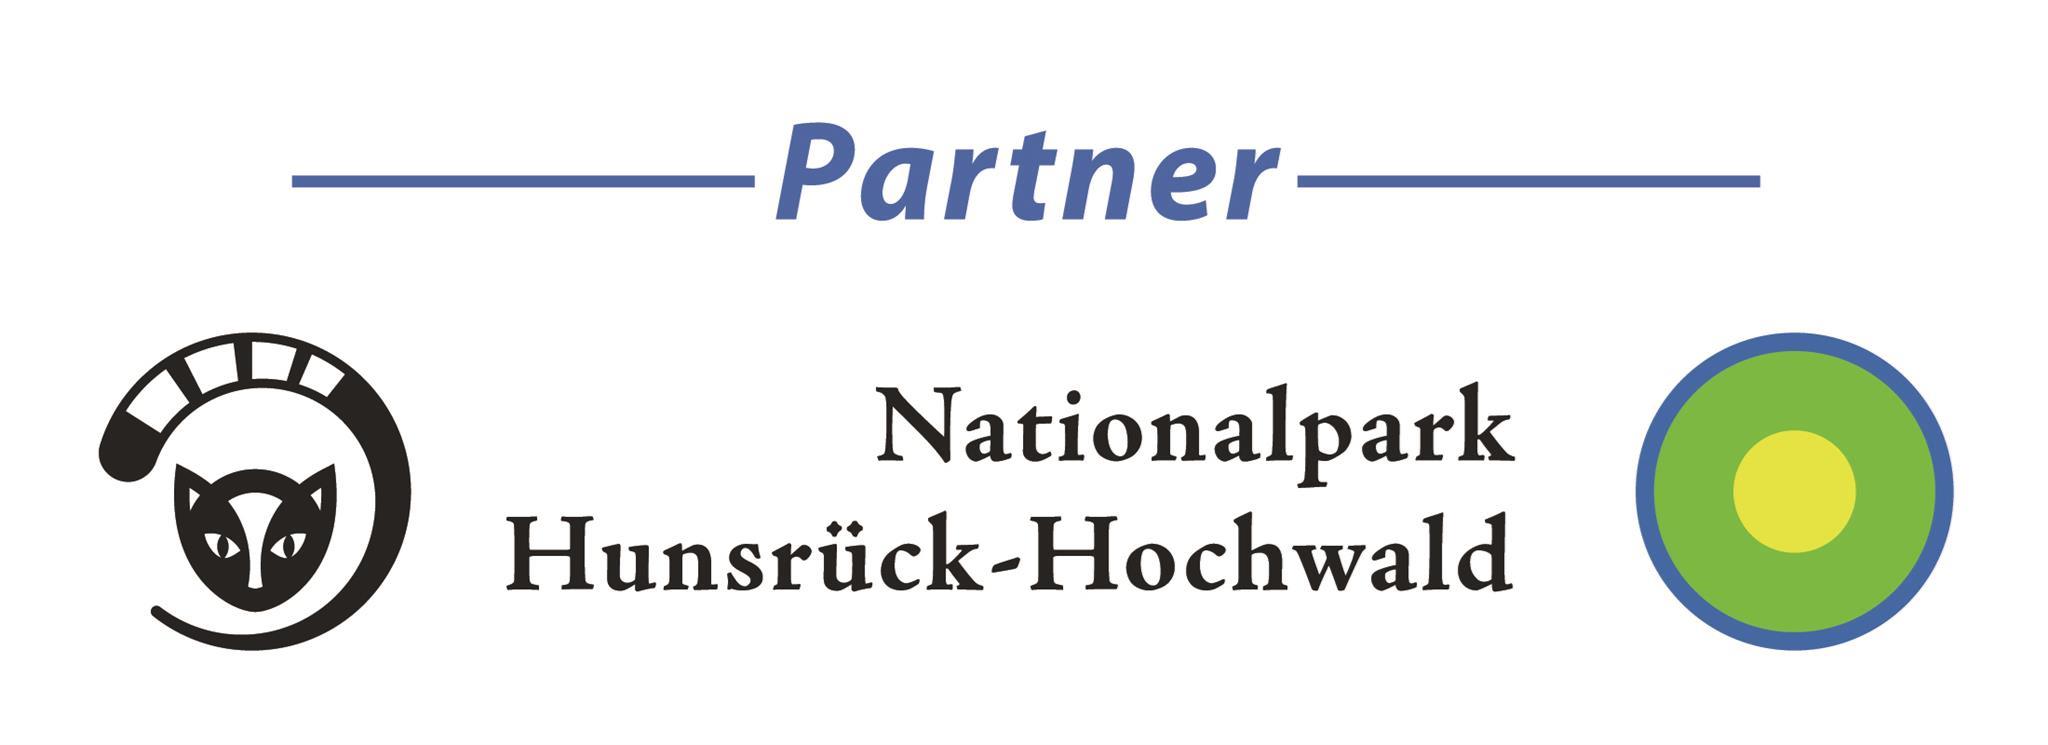 Nationalpark Partner Hunsrueck Hochwald